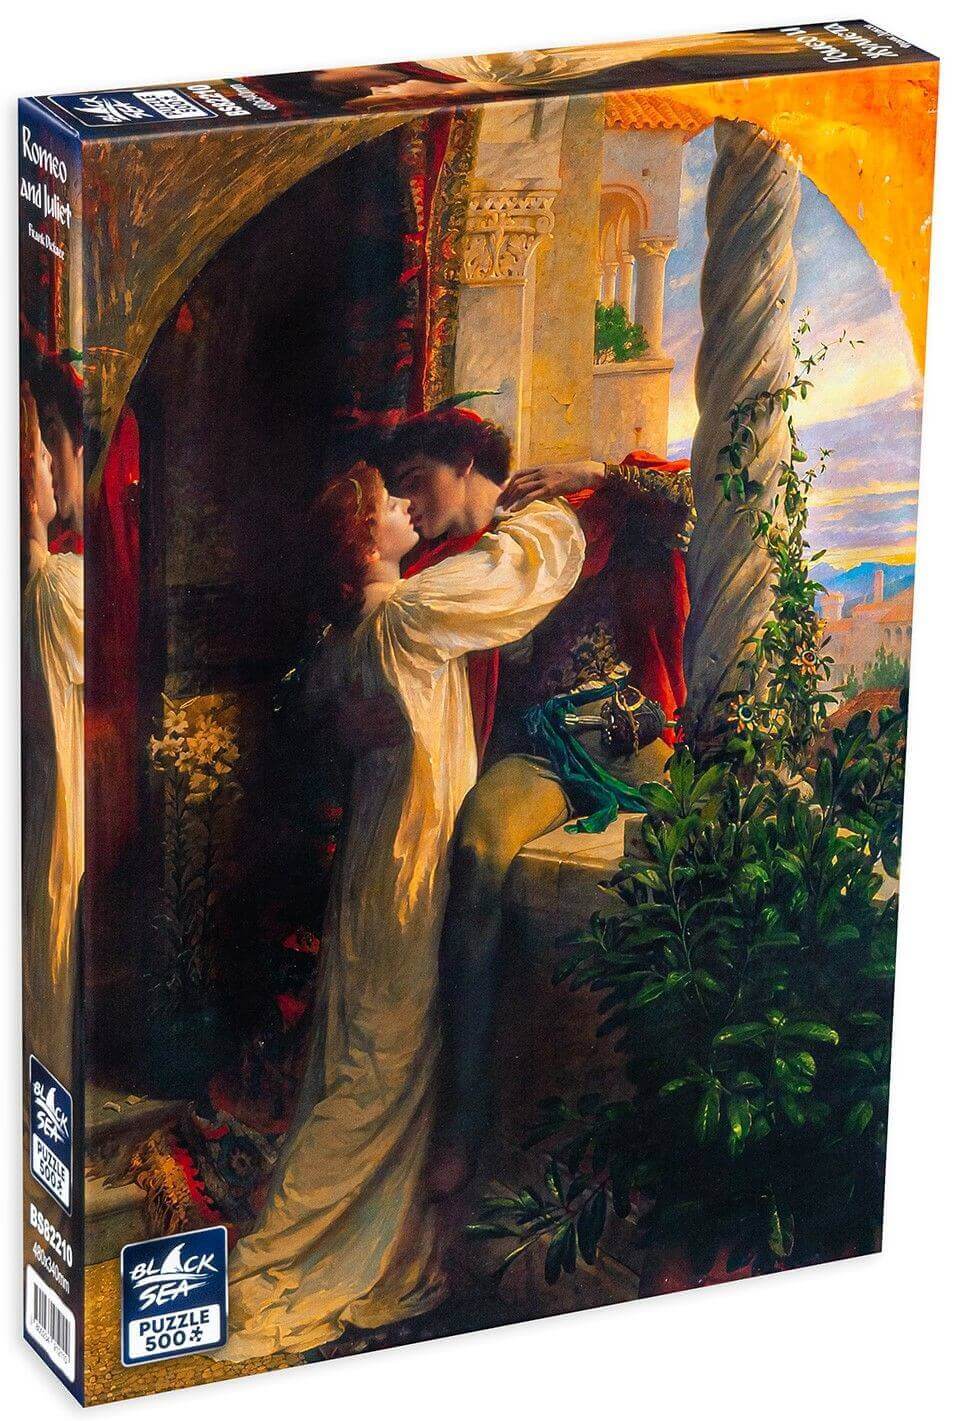 Puzzle Black Sea 500 pieces - Romeo and Juliet, -